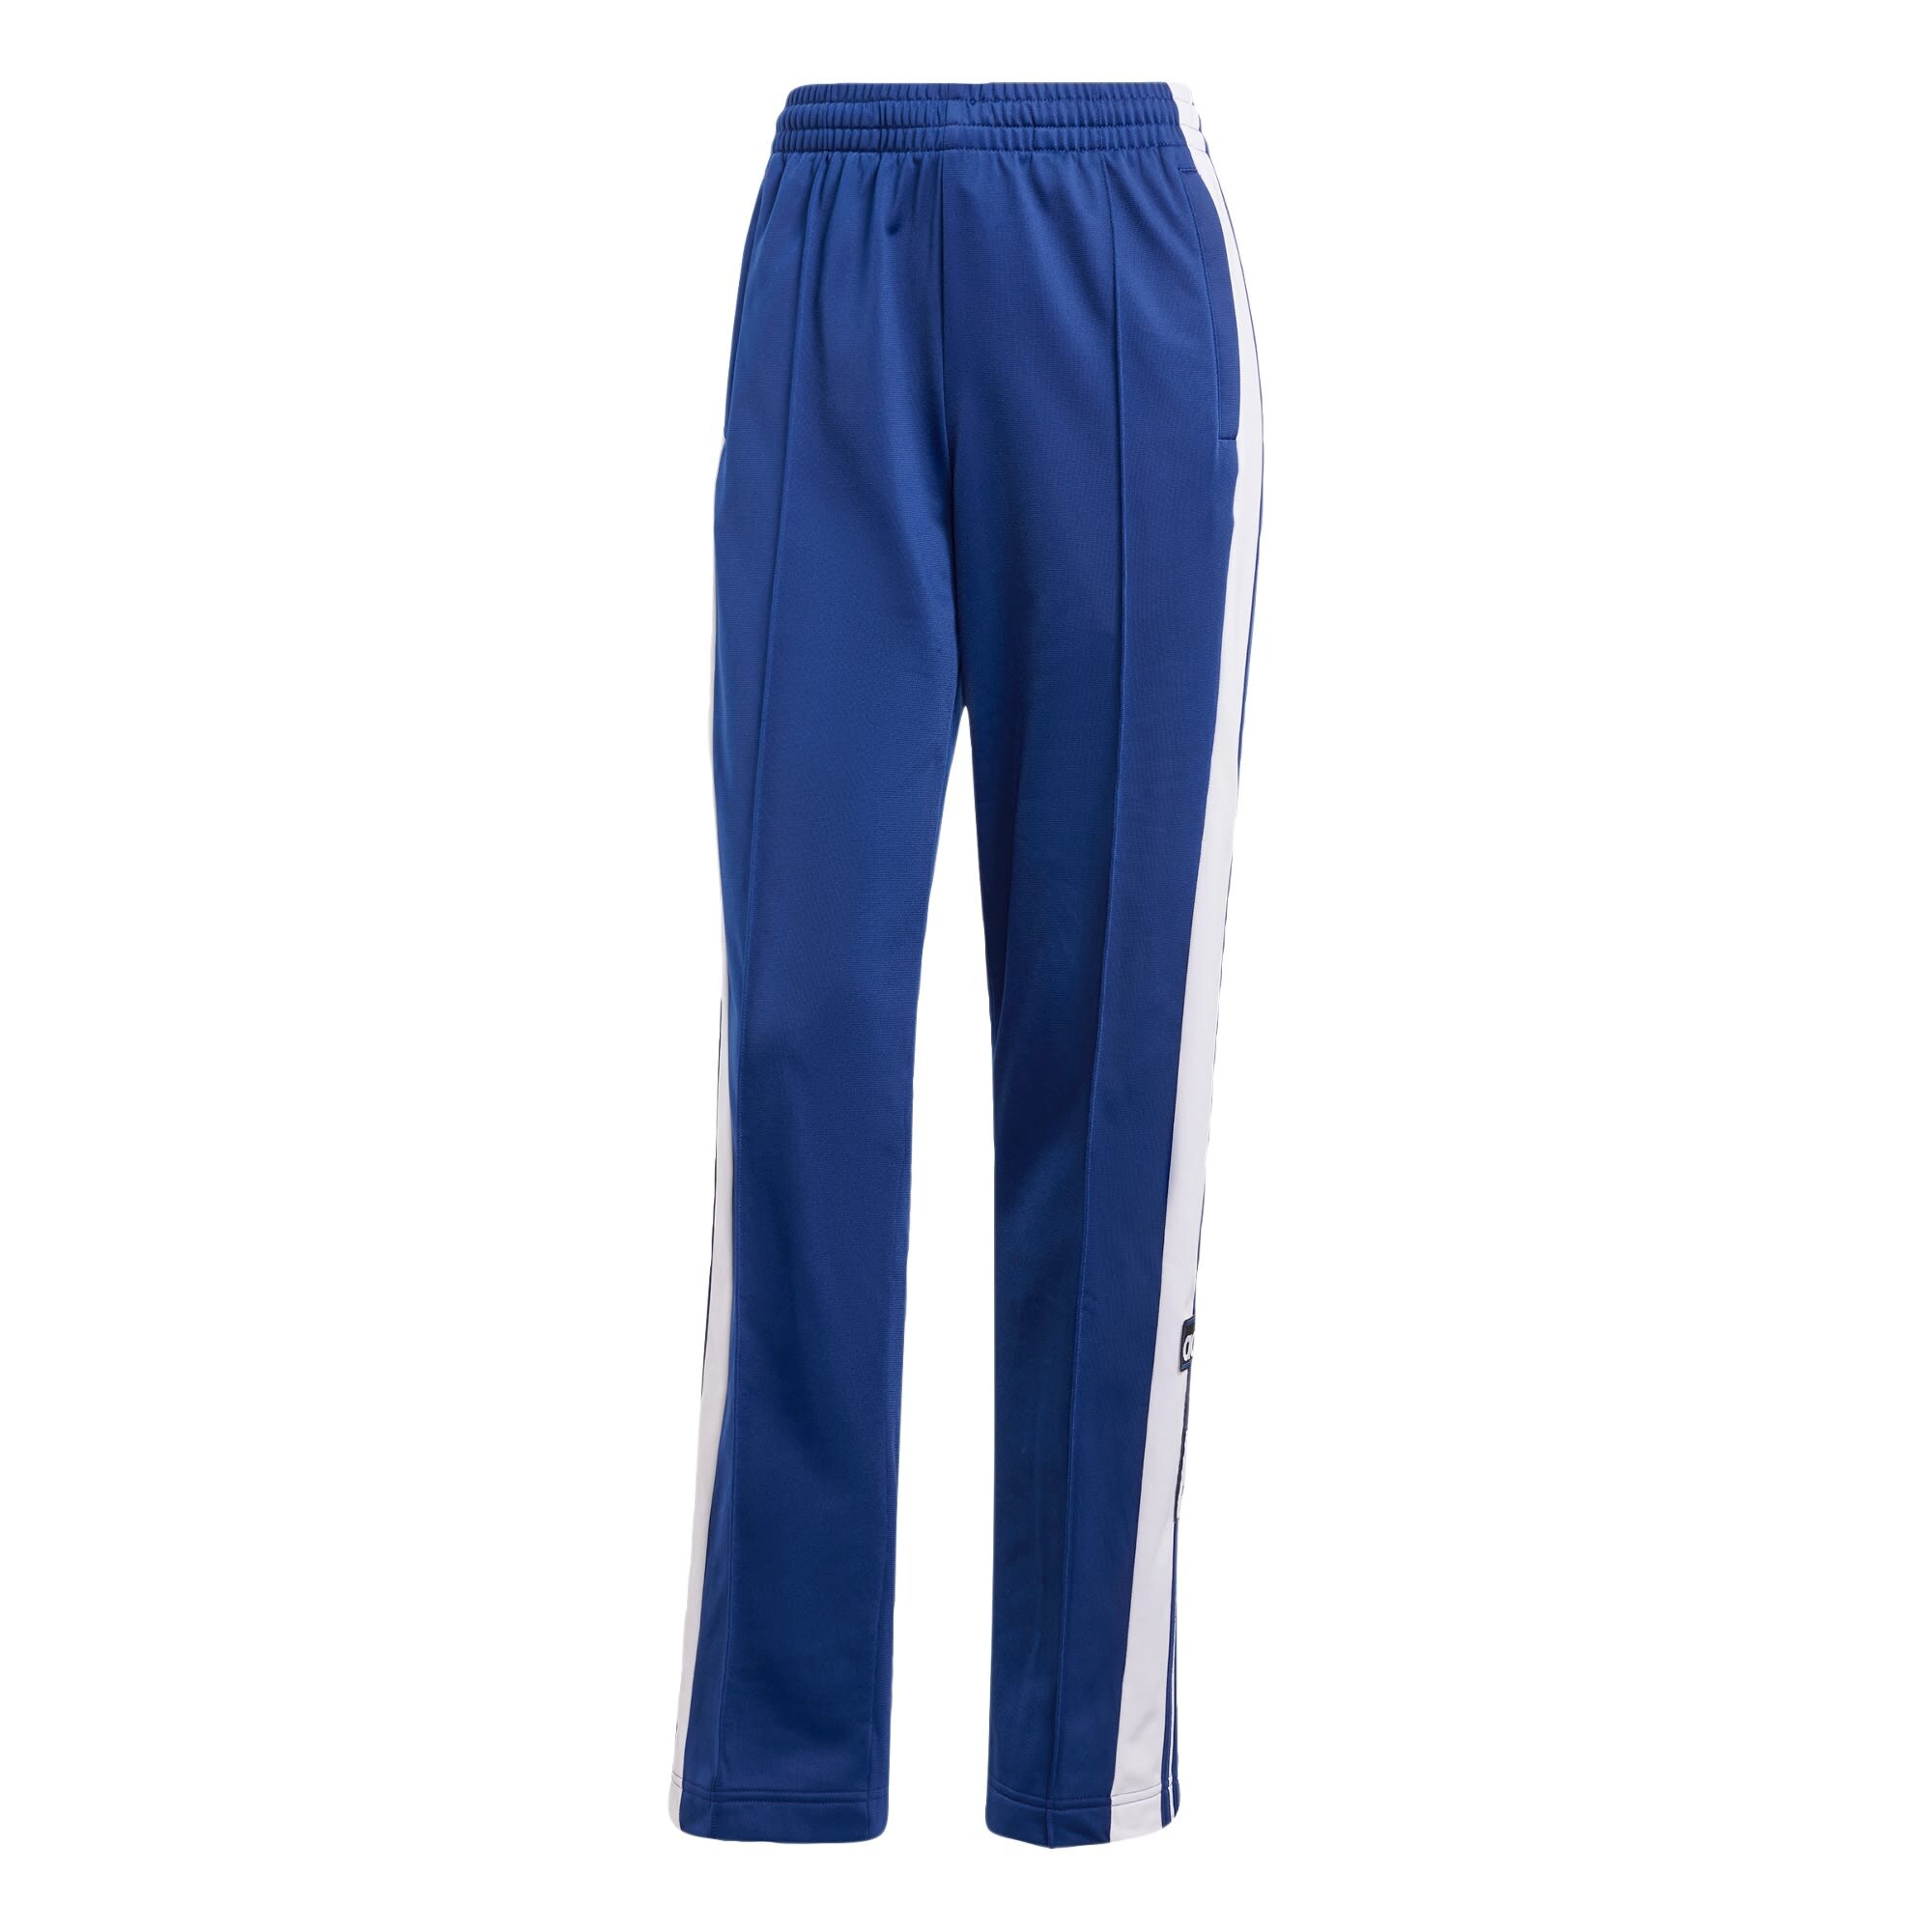 ADIDAS ORIGINALS Pantalon 'Adibreak' bleu foncé / noir / blanc en promo-Adidas Originals 1